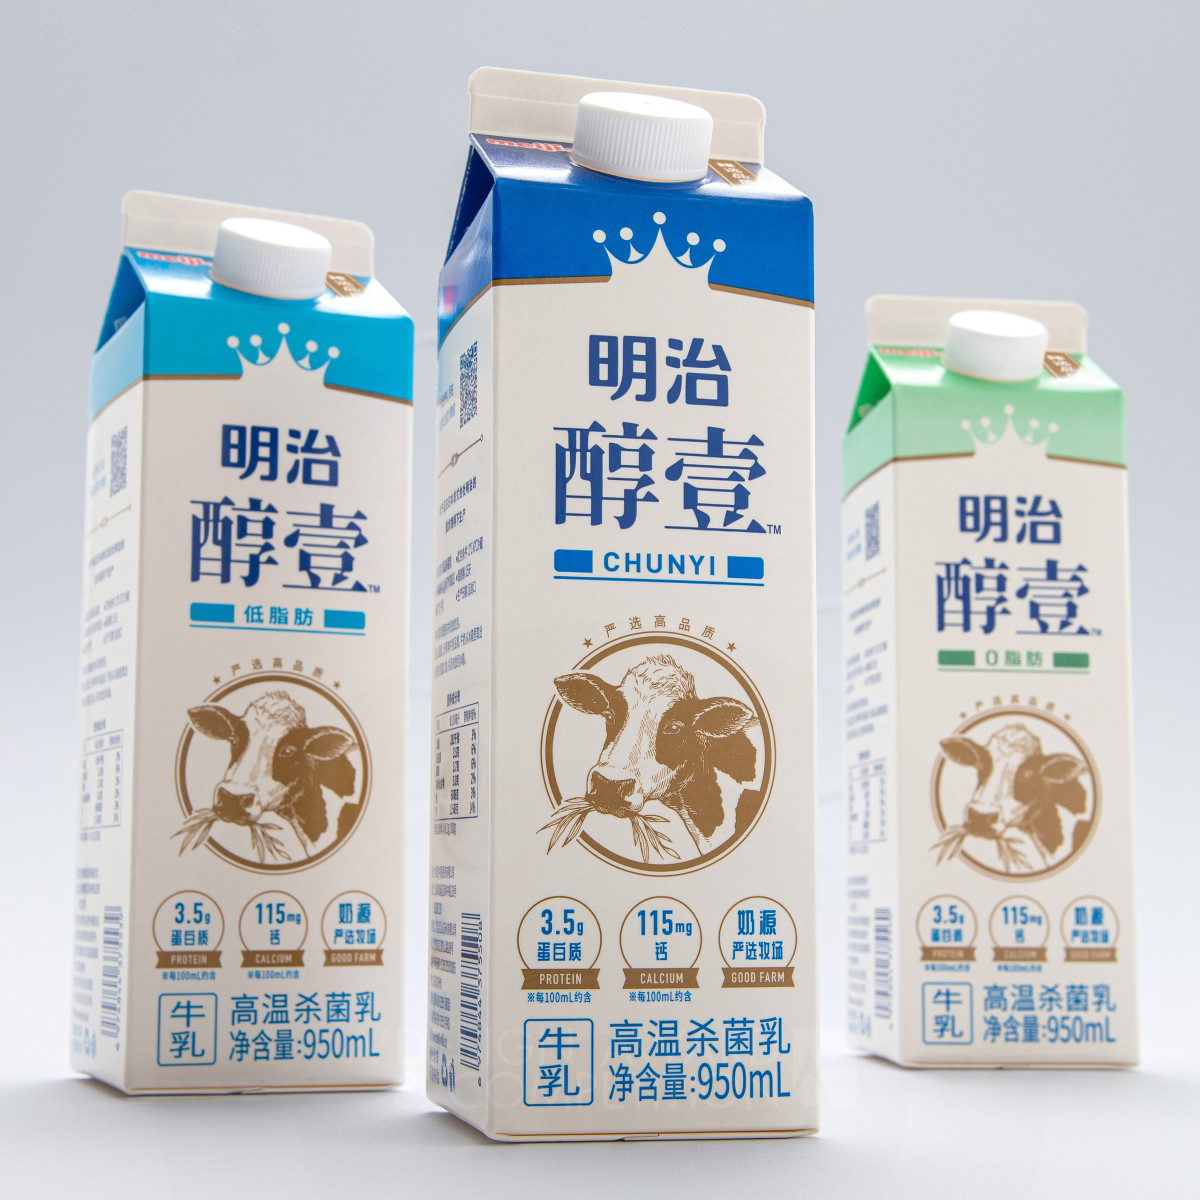 Kazuo Fukushima wins Iron at the prestigious A' Packaging Design Award with Chilled Milk Carton.